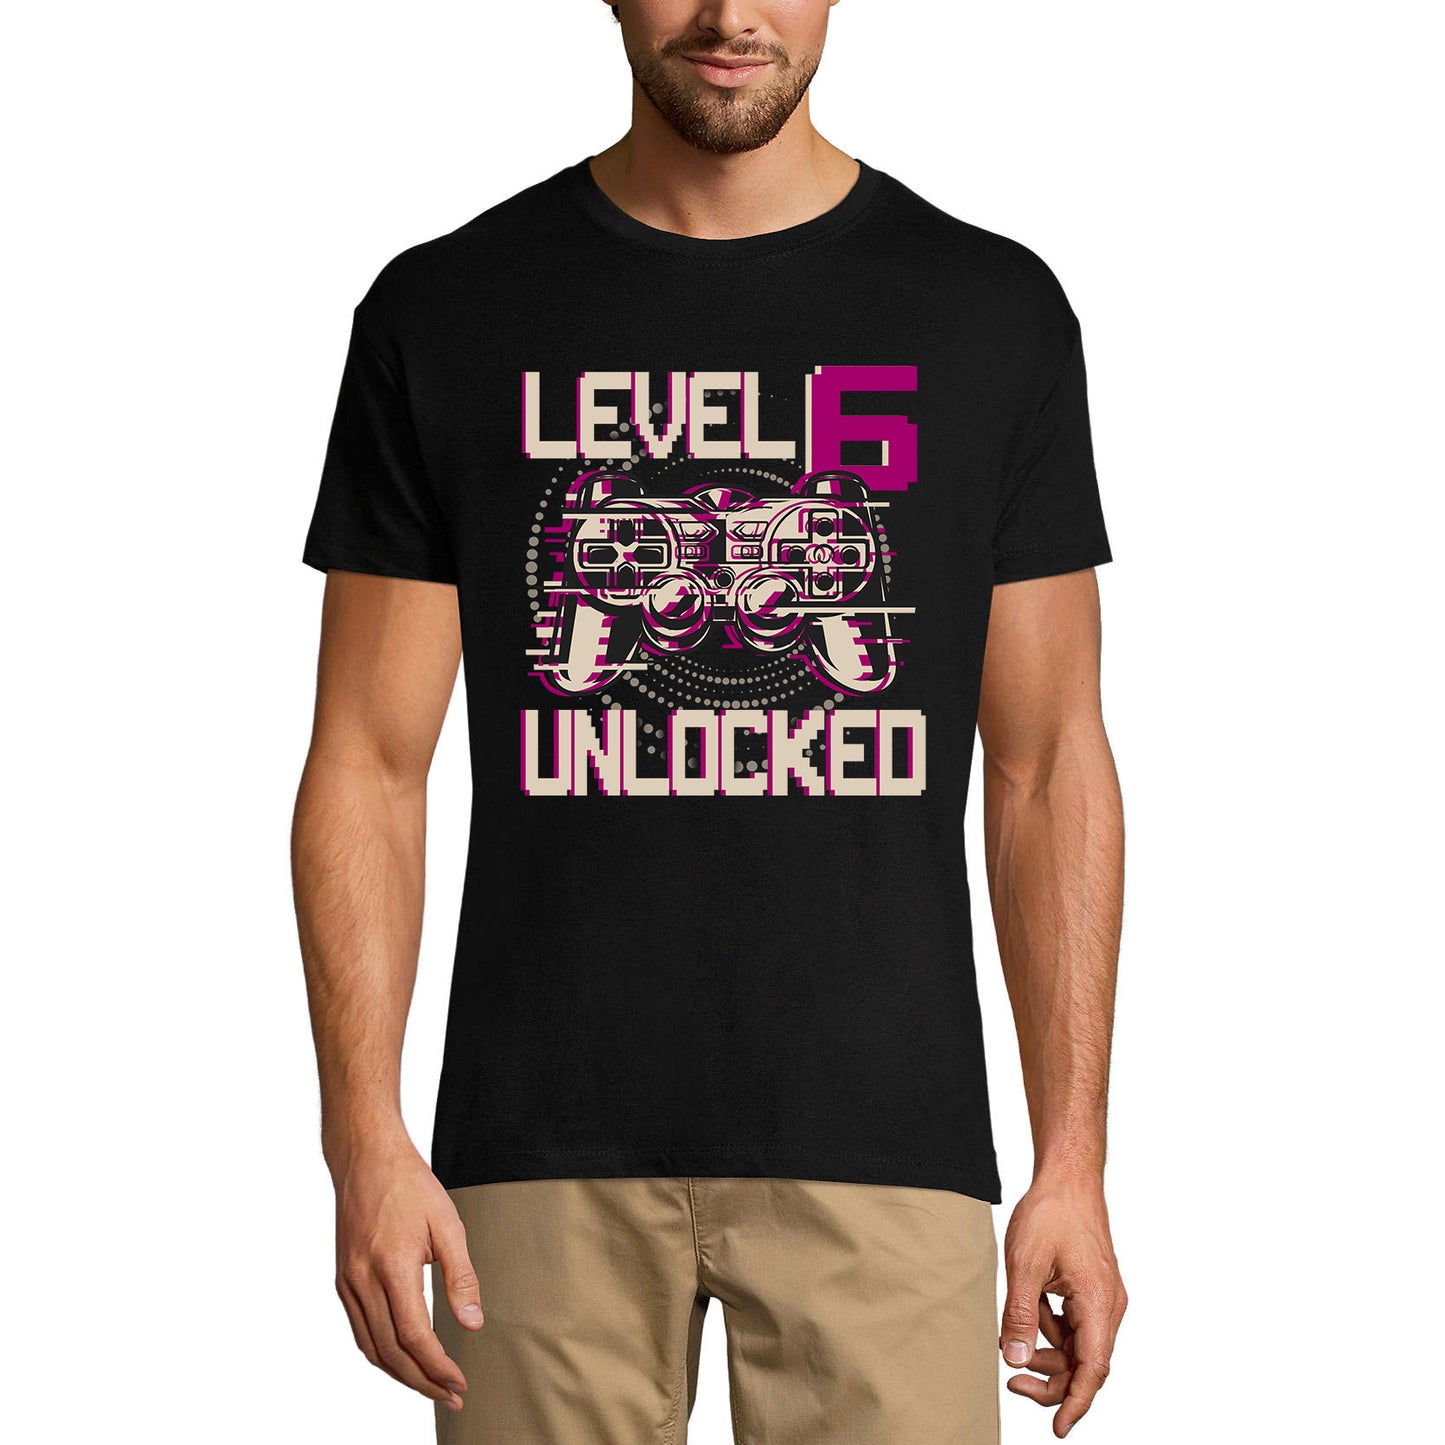 ULTRABASIC Men's Gaming T-Shirt Level 6 Unlocked - Funny Gamer 6th Birthday Tee Shirt